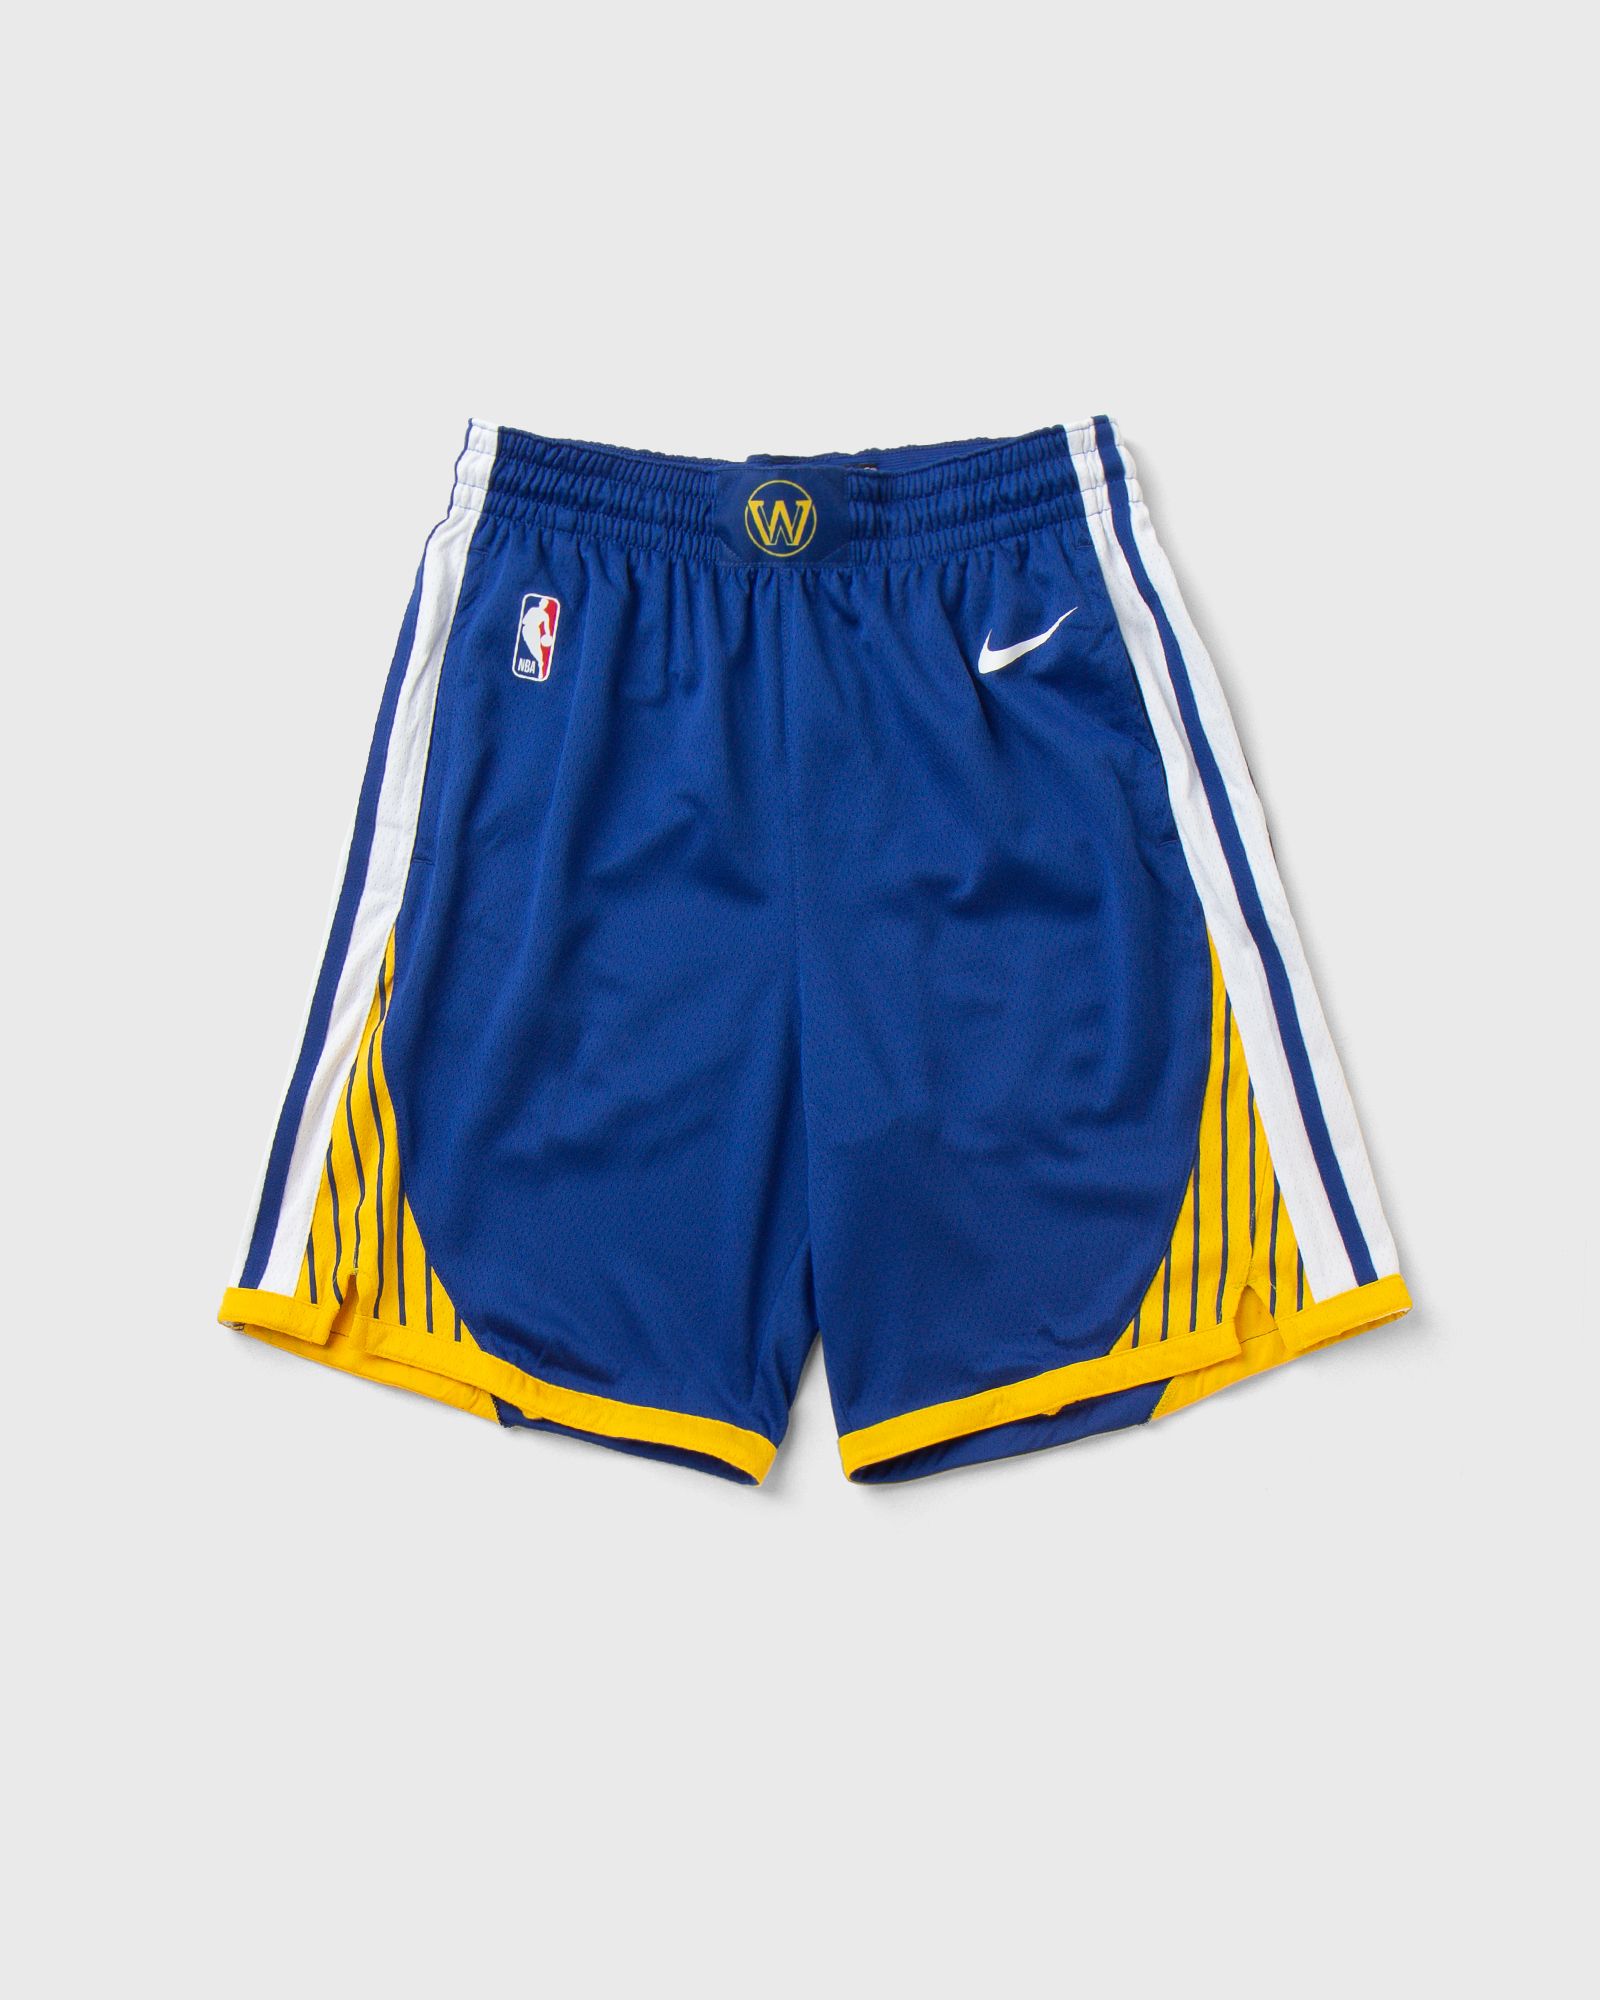 Nike - nba swingman shorts golden state warriors icon edition men sport & team shorts blue in größe:xxl